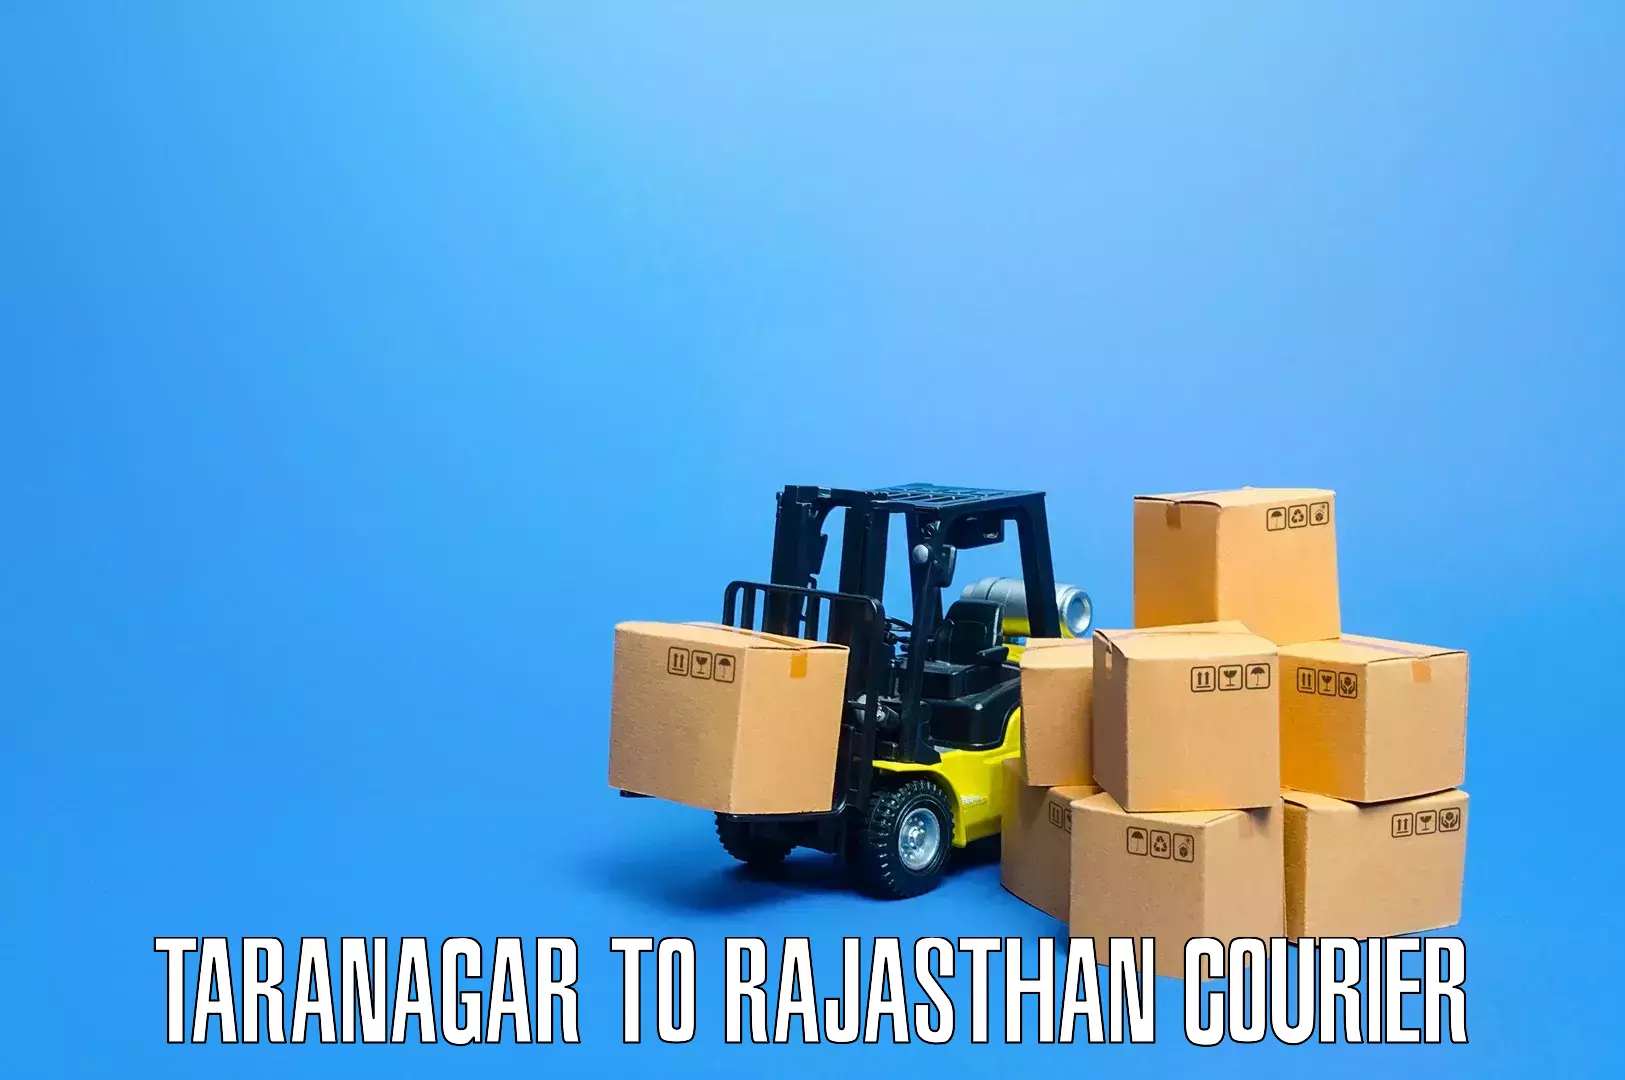 Professional moving company Taranagar to Bhilwara